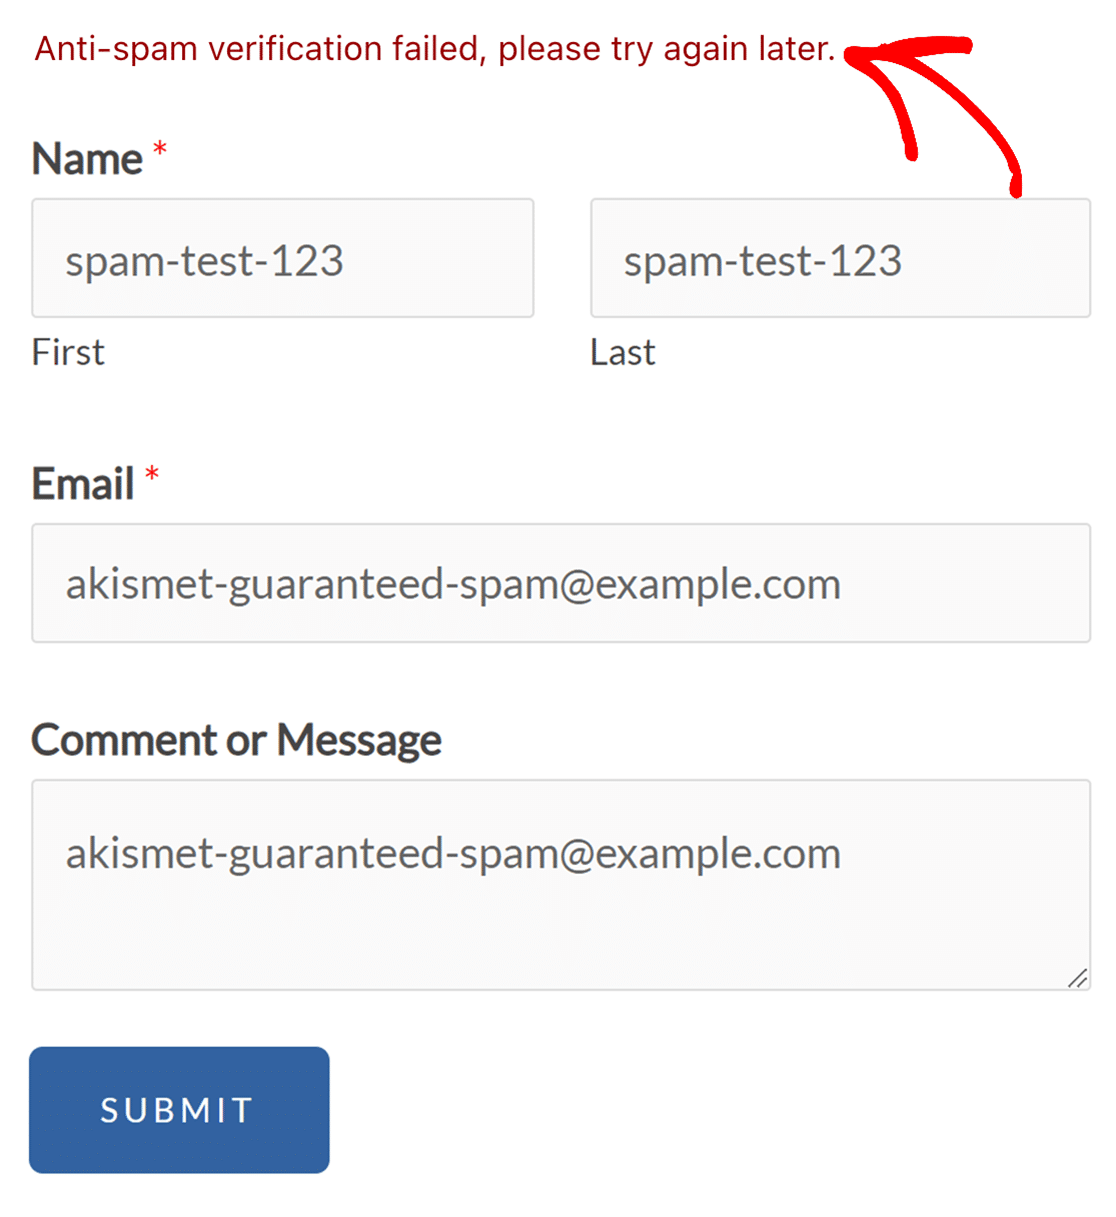 An anti-spam failure notice